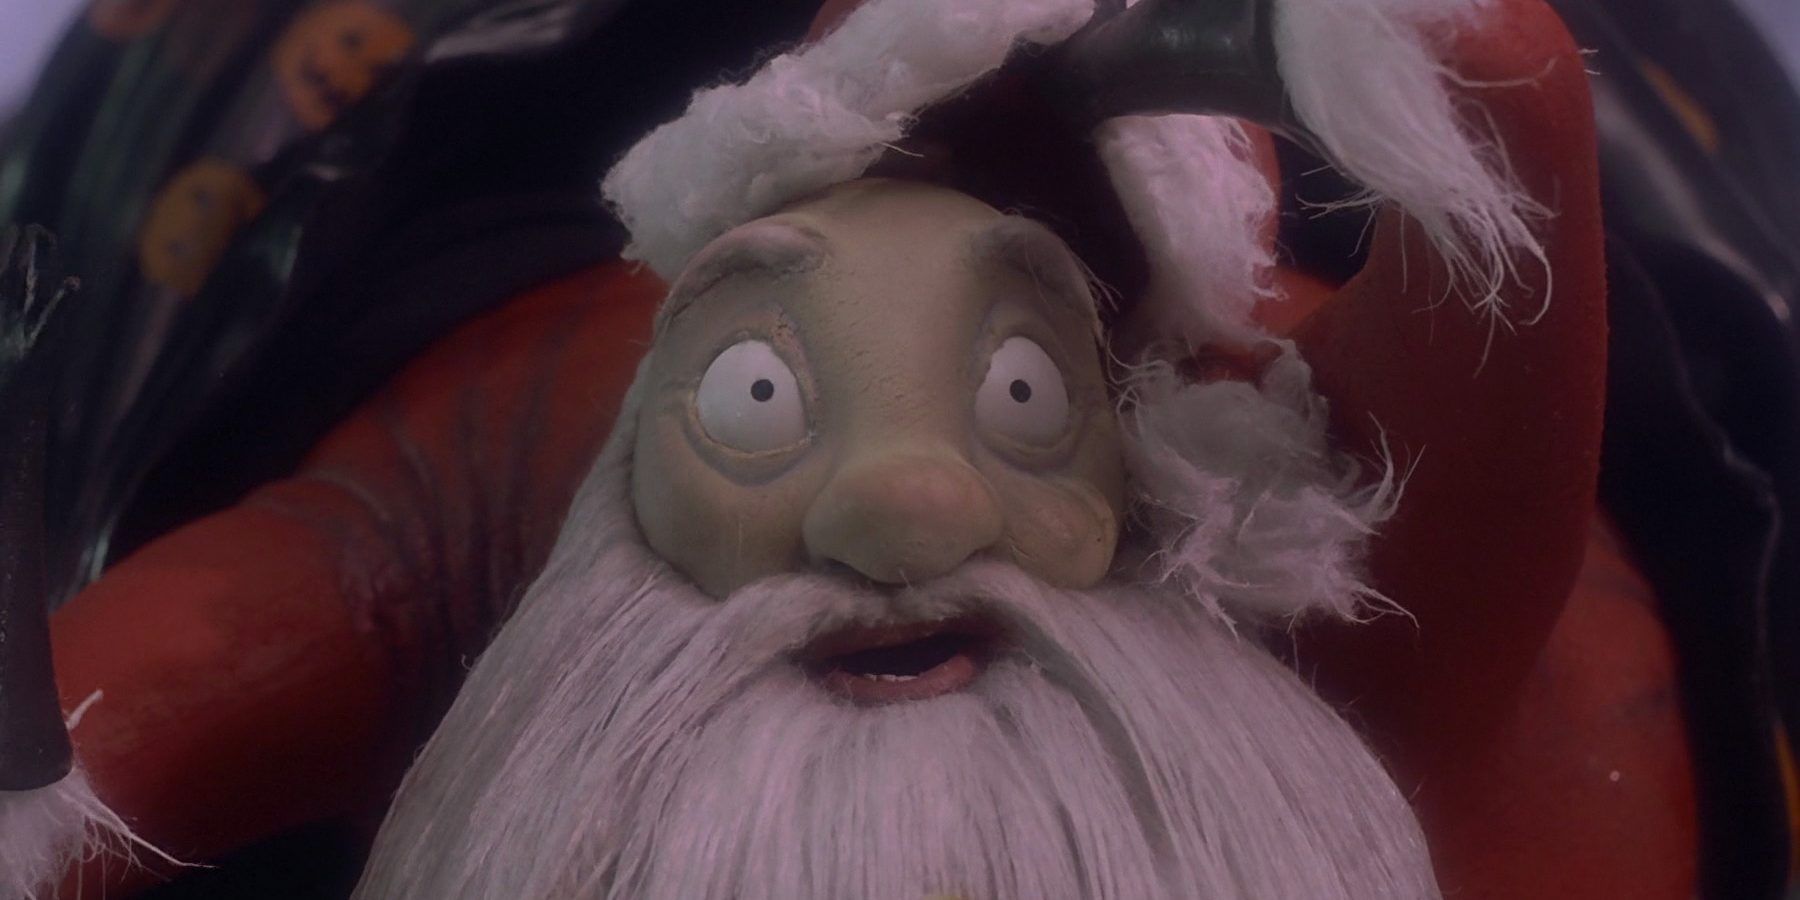 Santa looking scared in The Nightmare Before Christmas